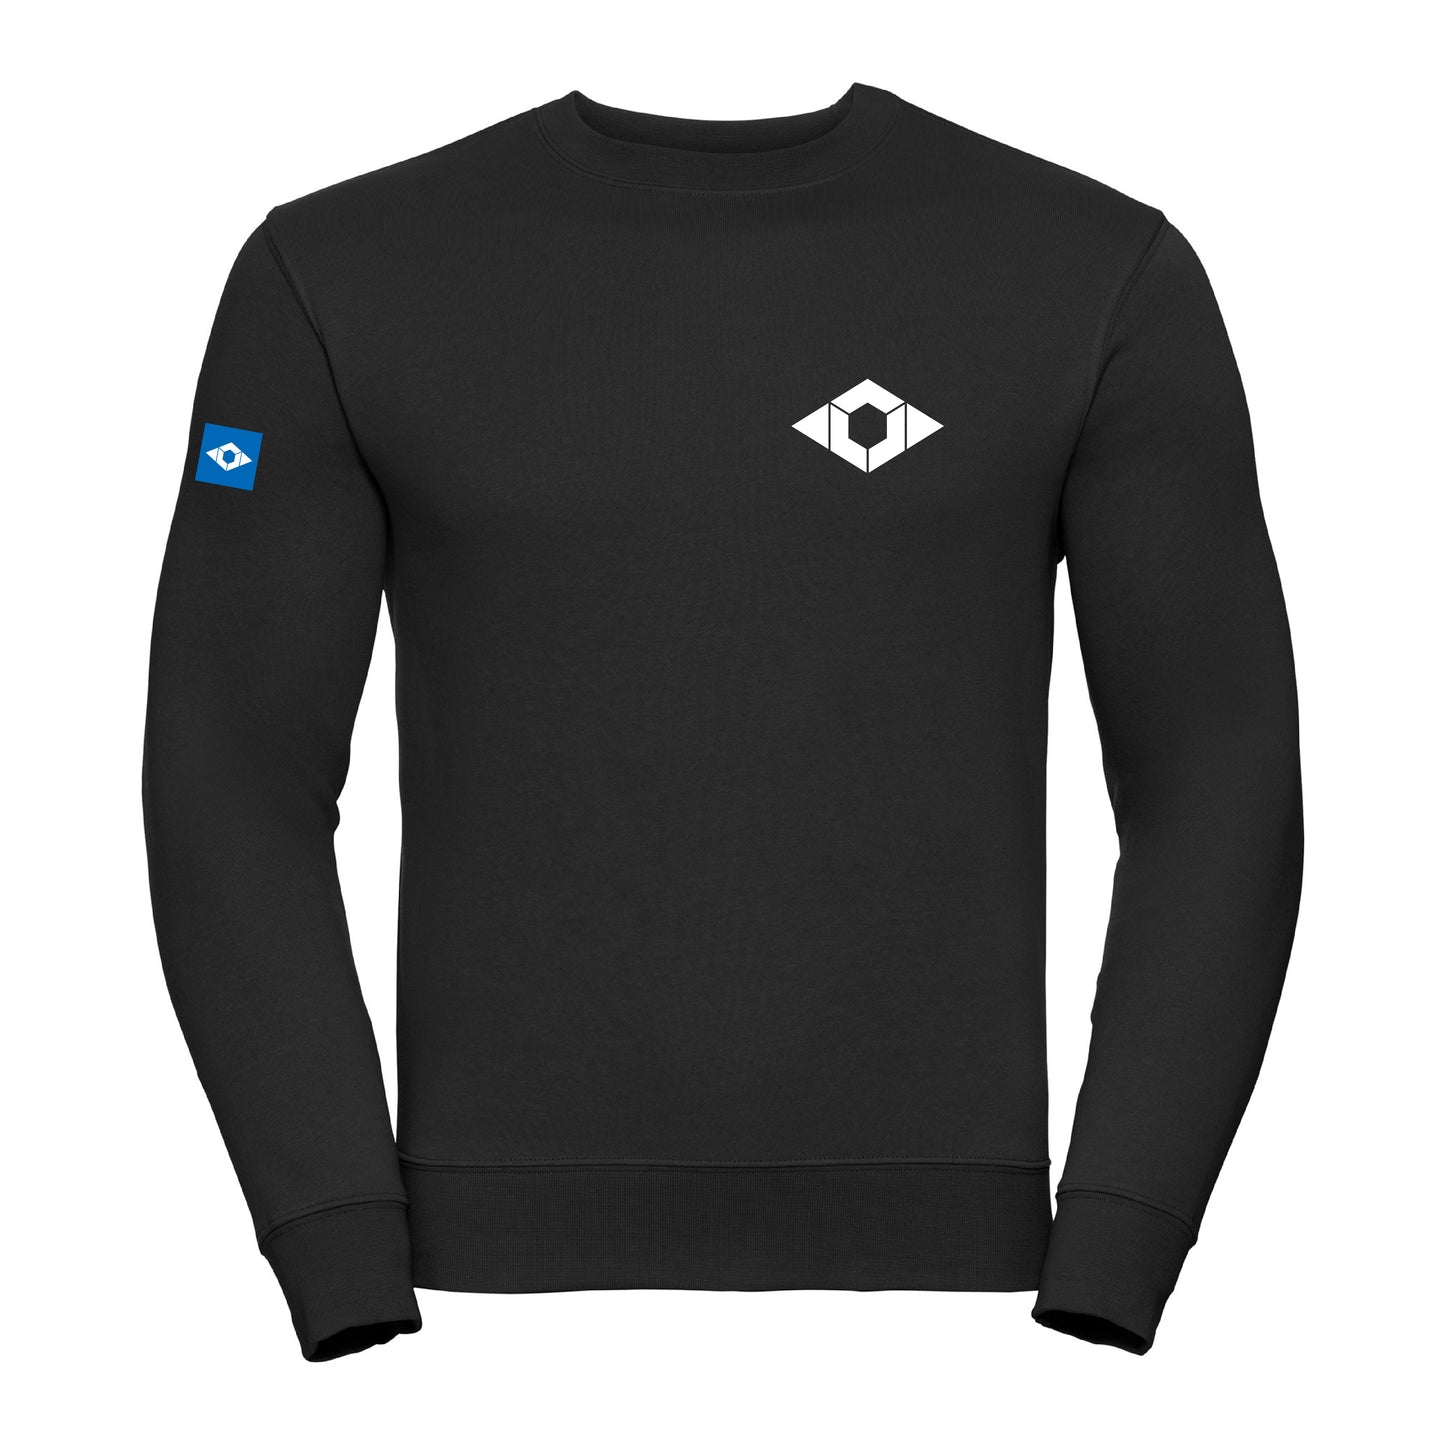 Union of Forces® Sweatshirt